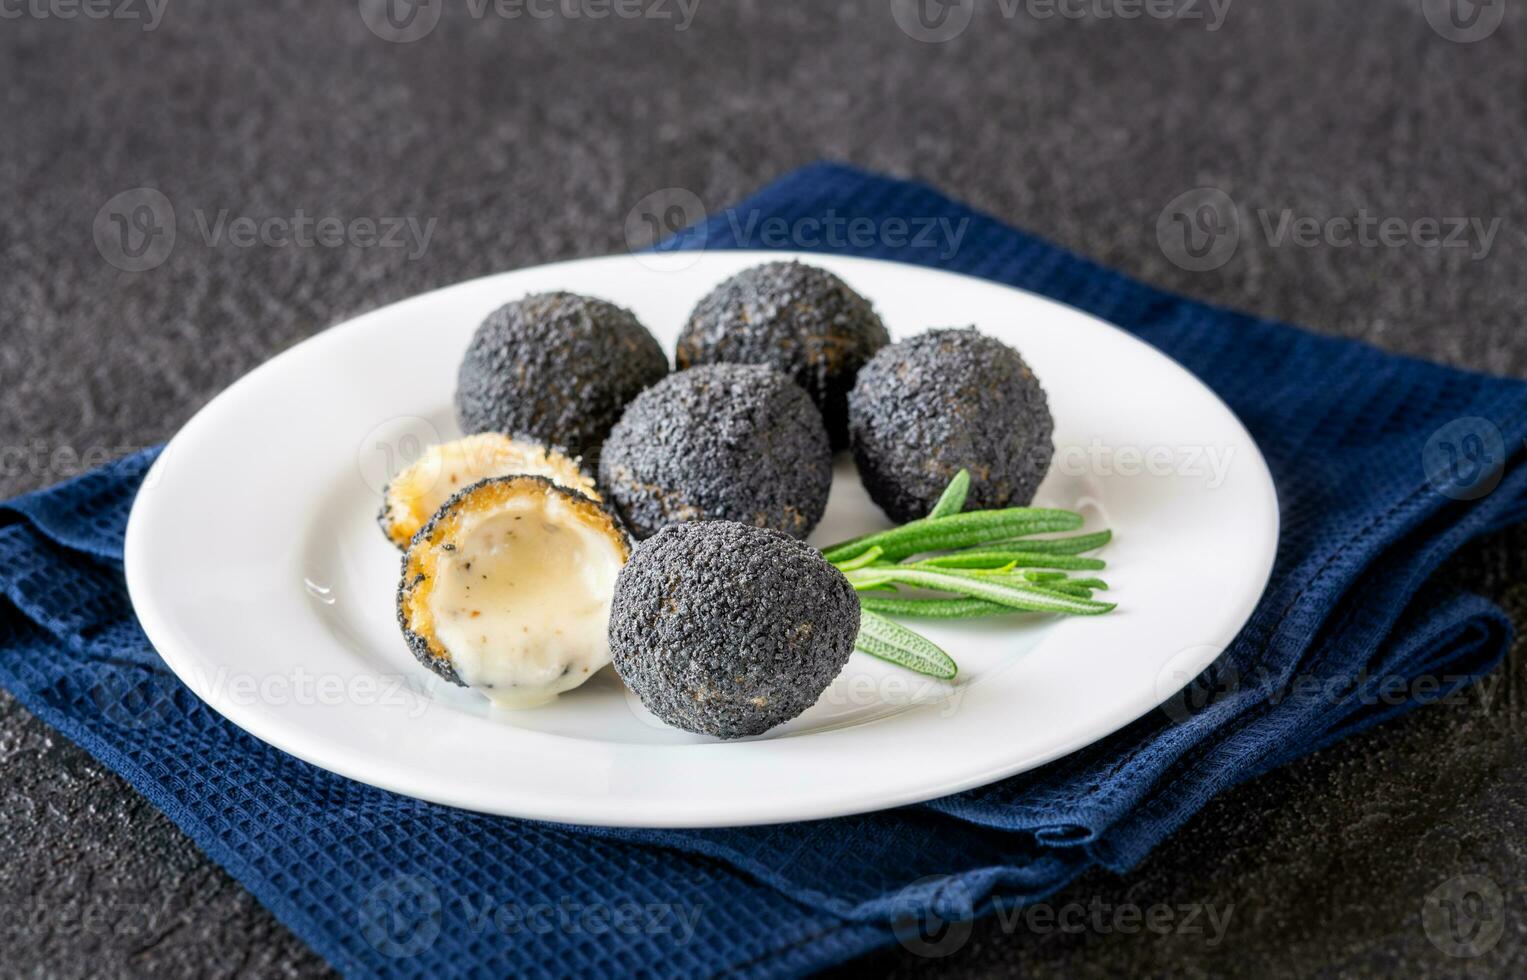 Black truffle mozzarella balls photo